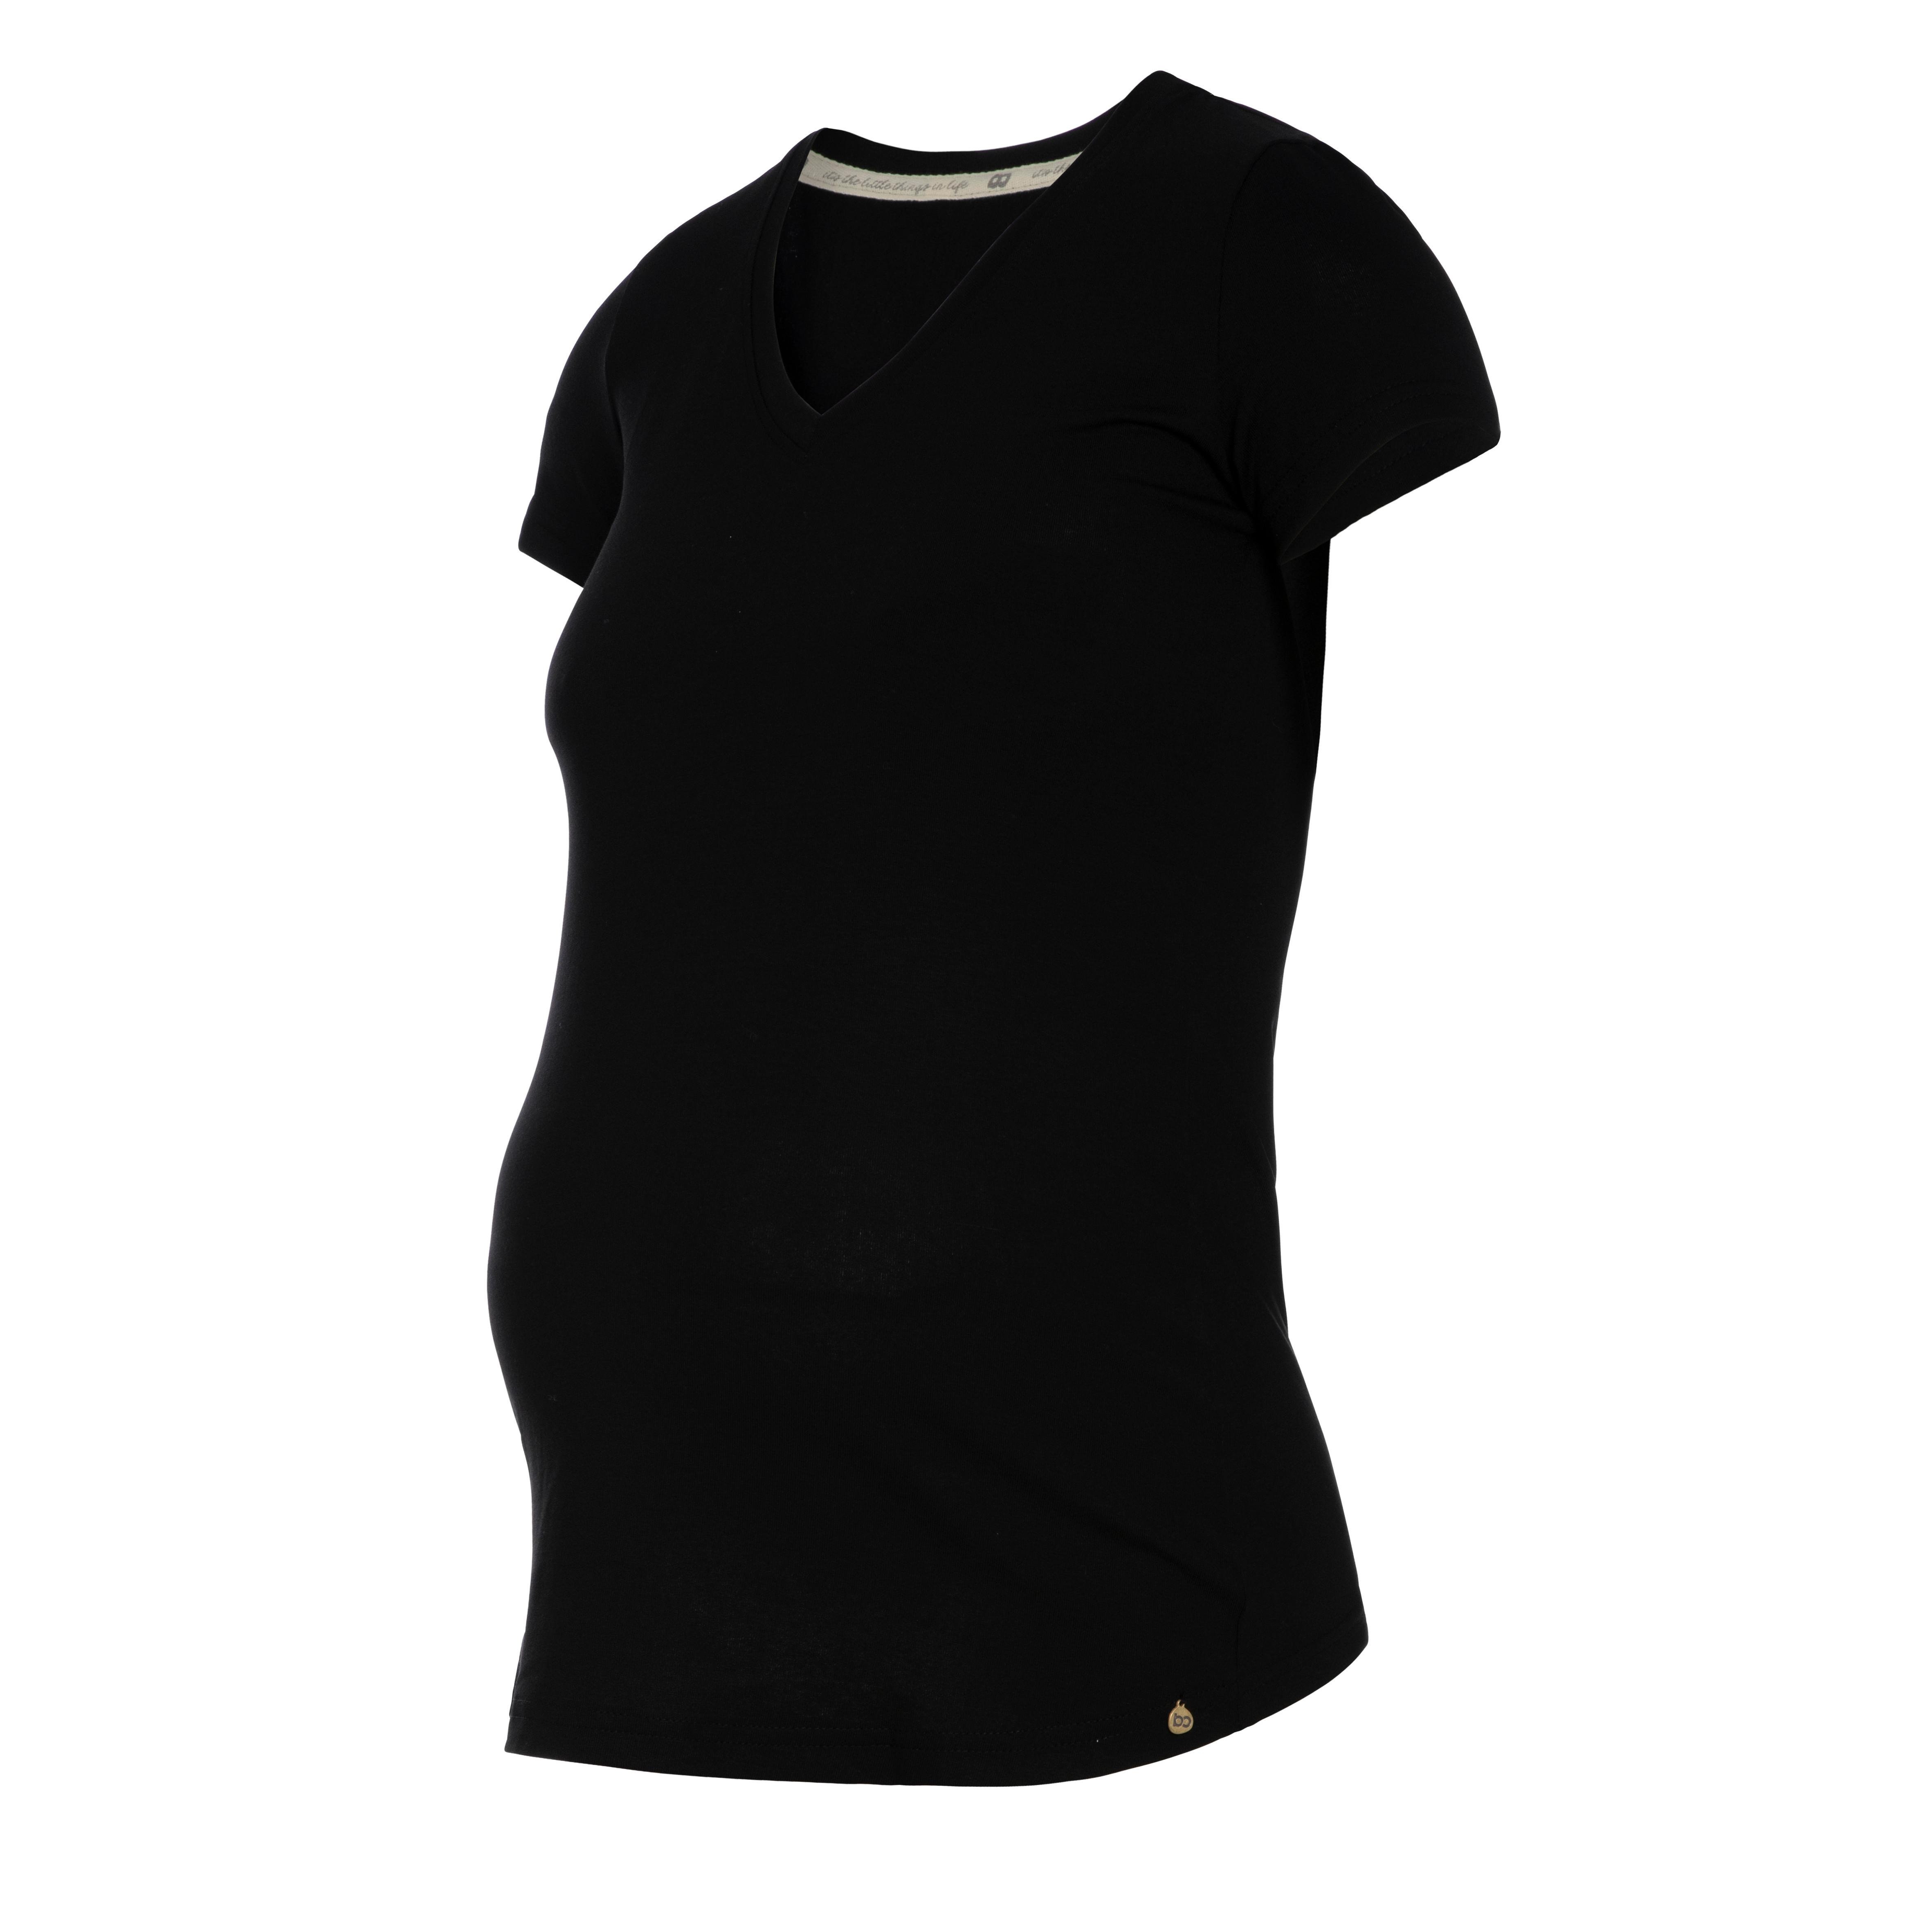 Maternity T-shirt Glow black - S